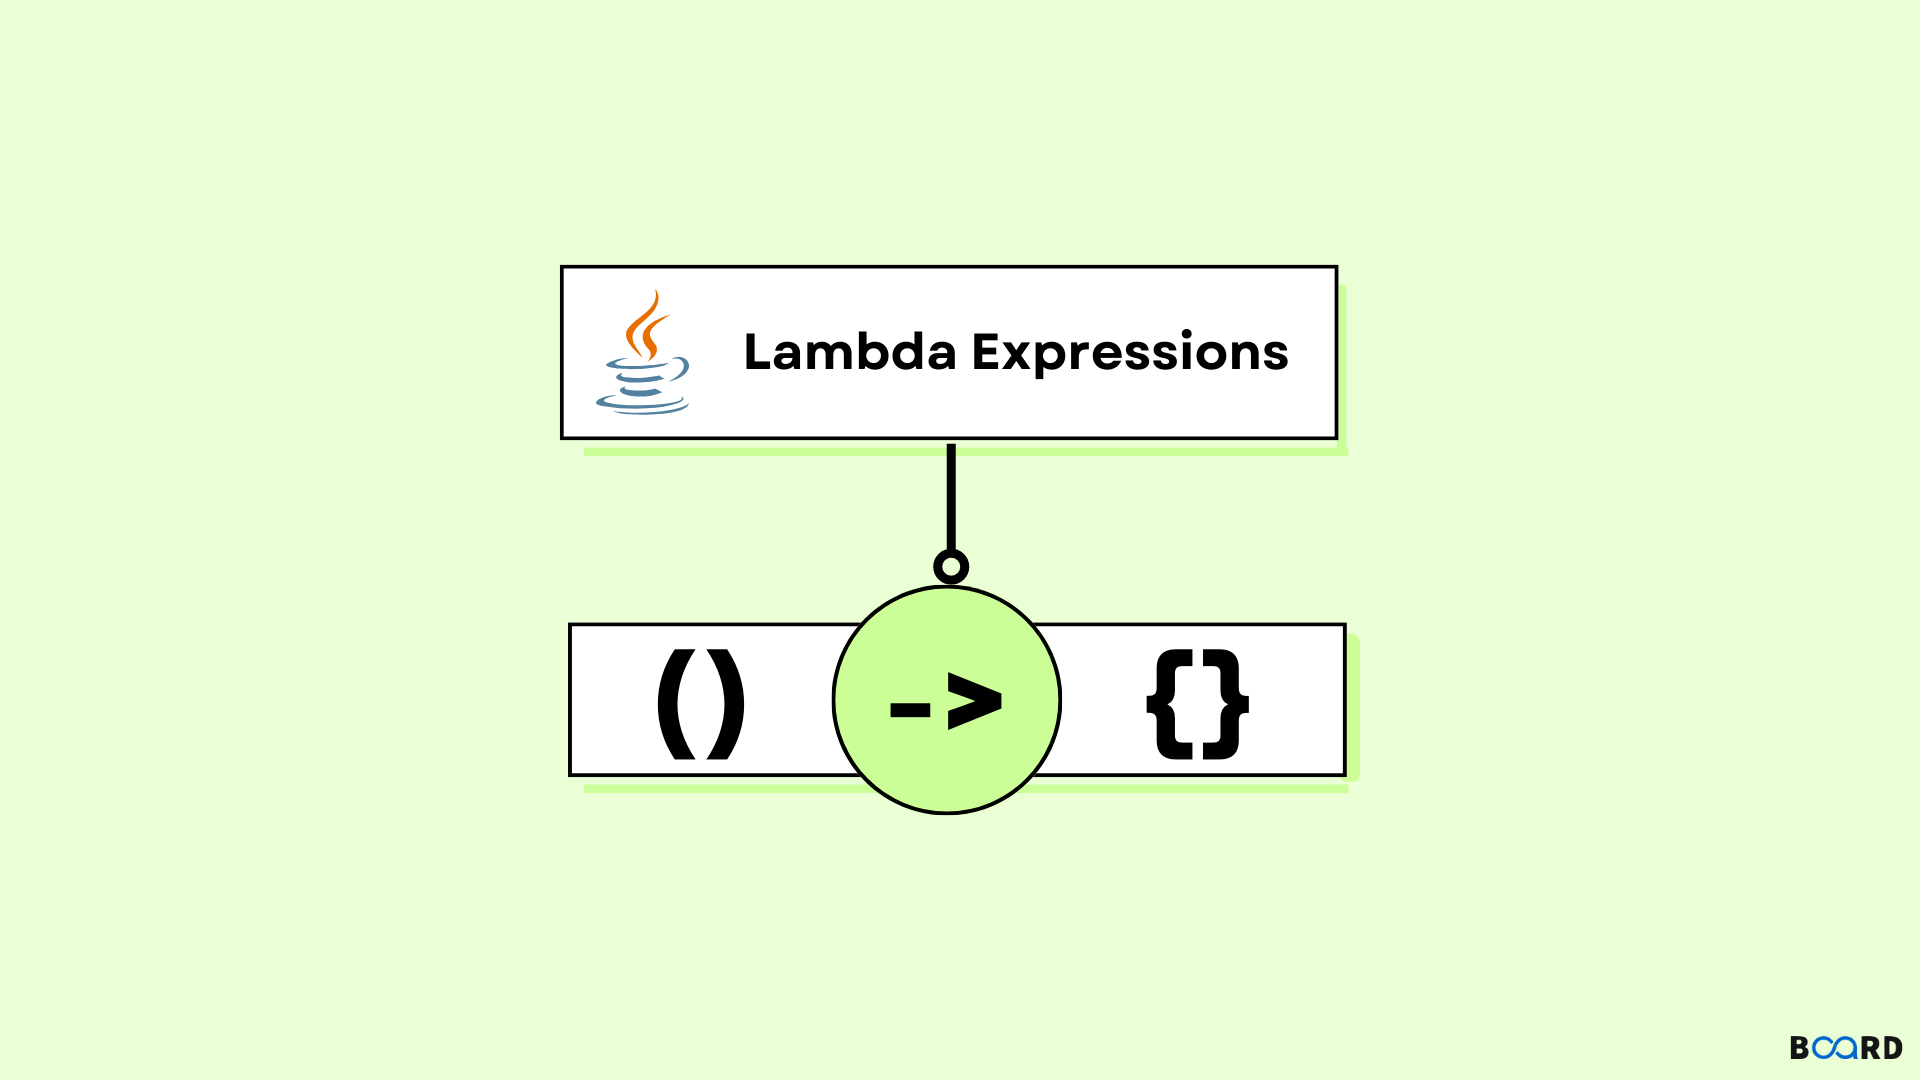 Lambda Expression in Java